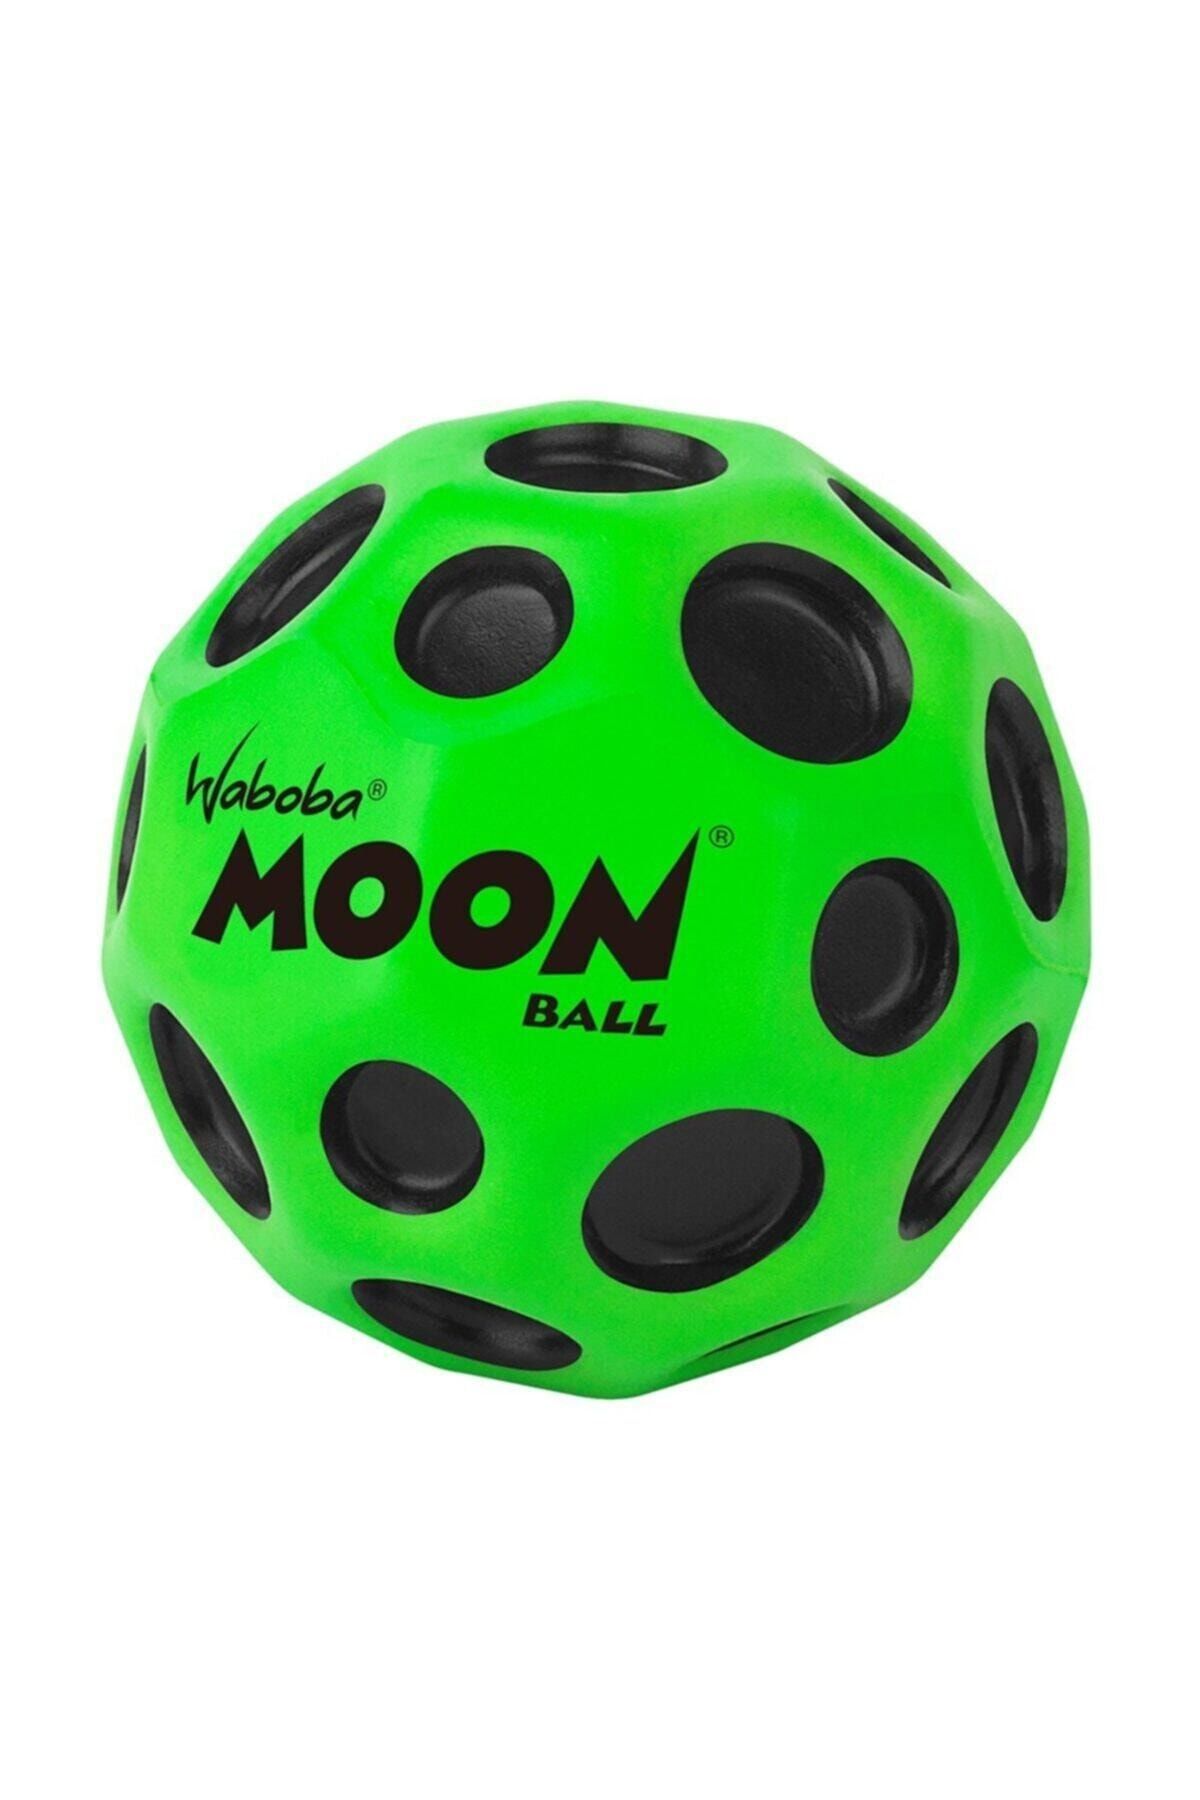 Waboba Moon Ball Top